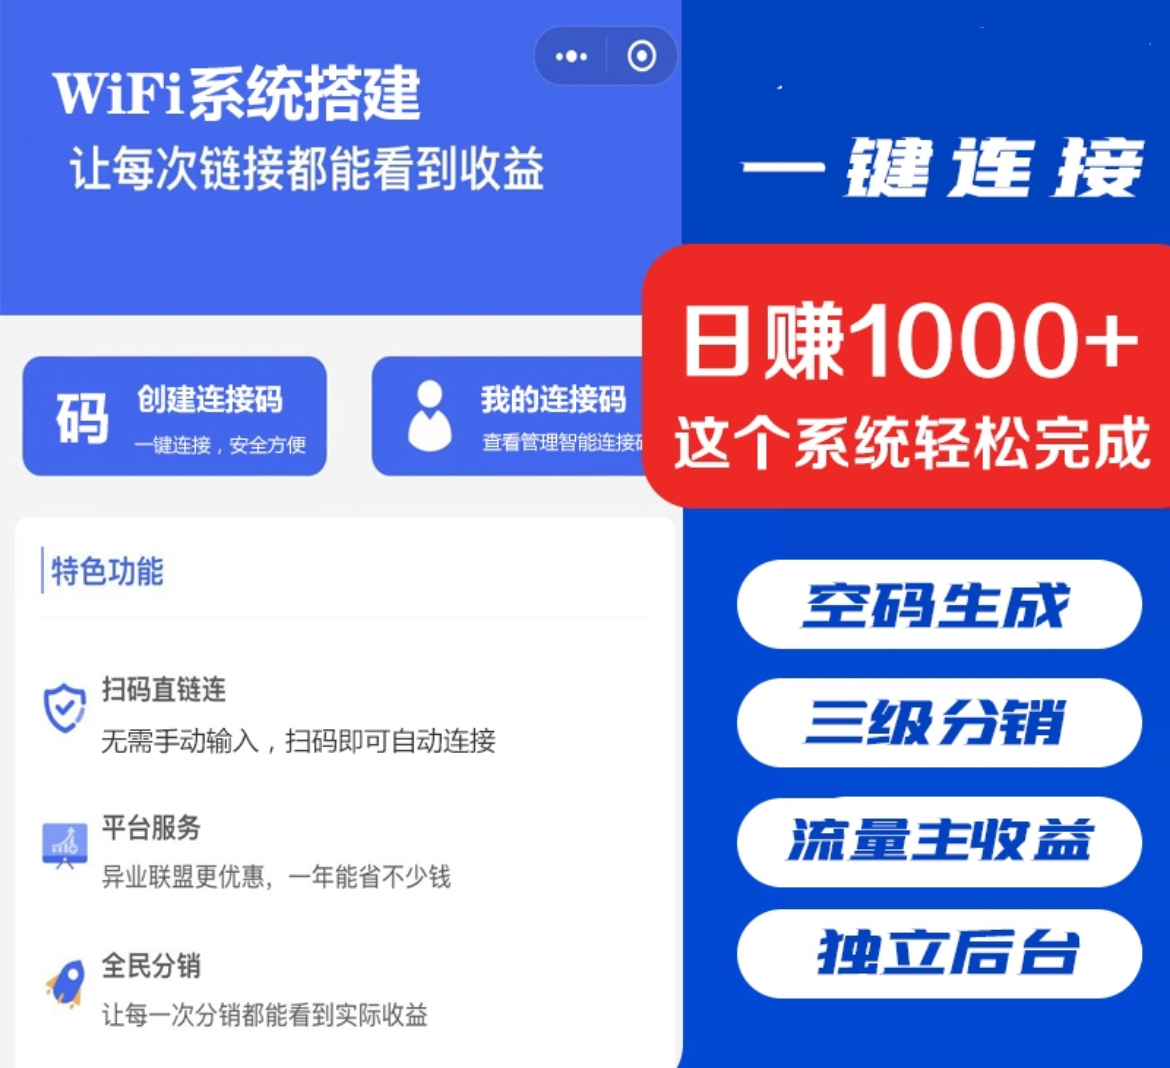 WiFi营销小程序共享WiFi门店一键免密码连接WiFi流量主分销小程序-知墨网